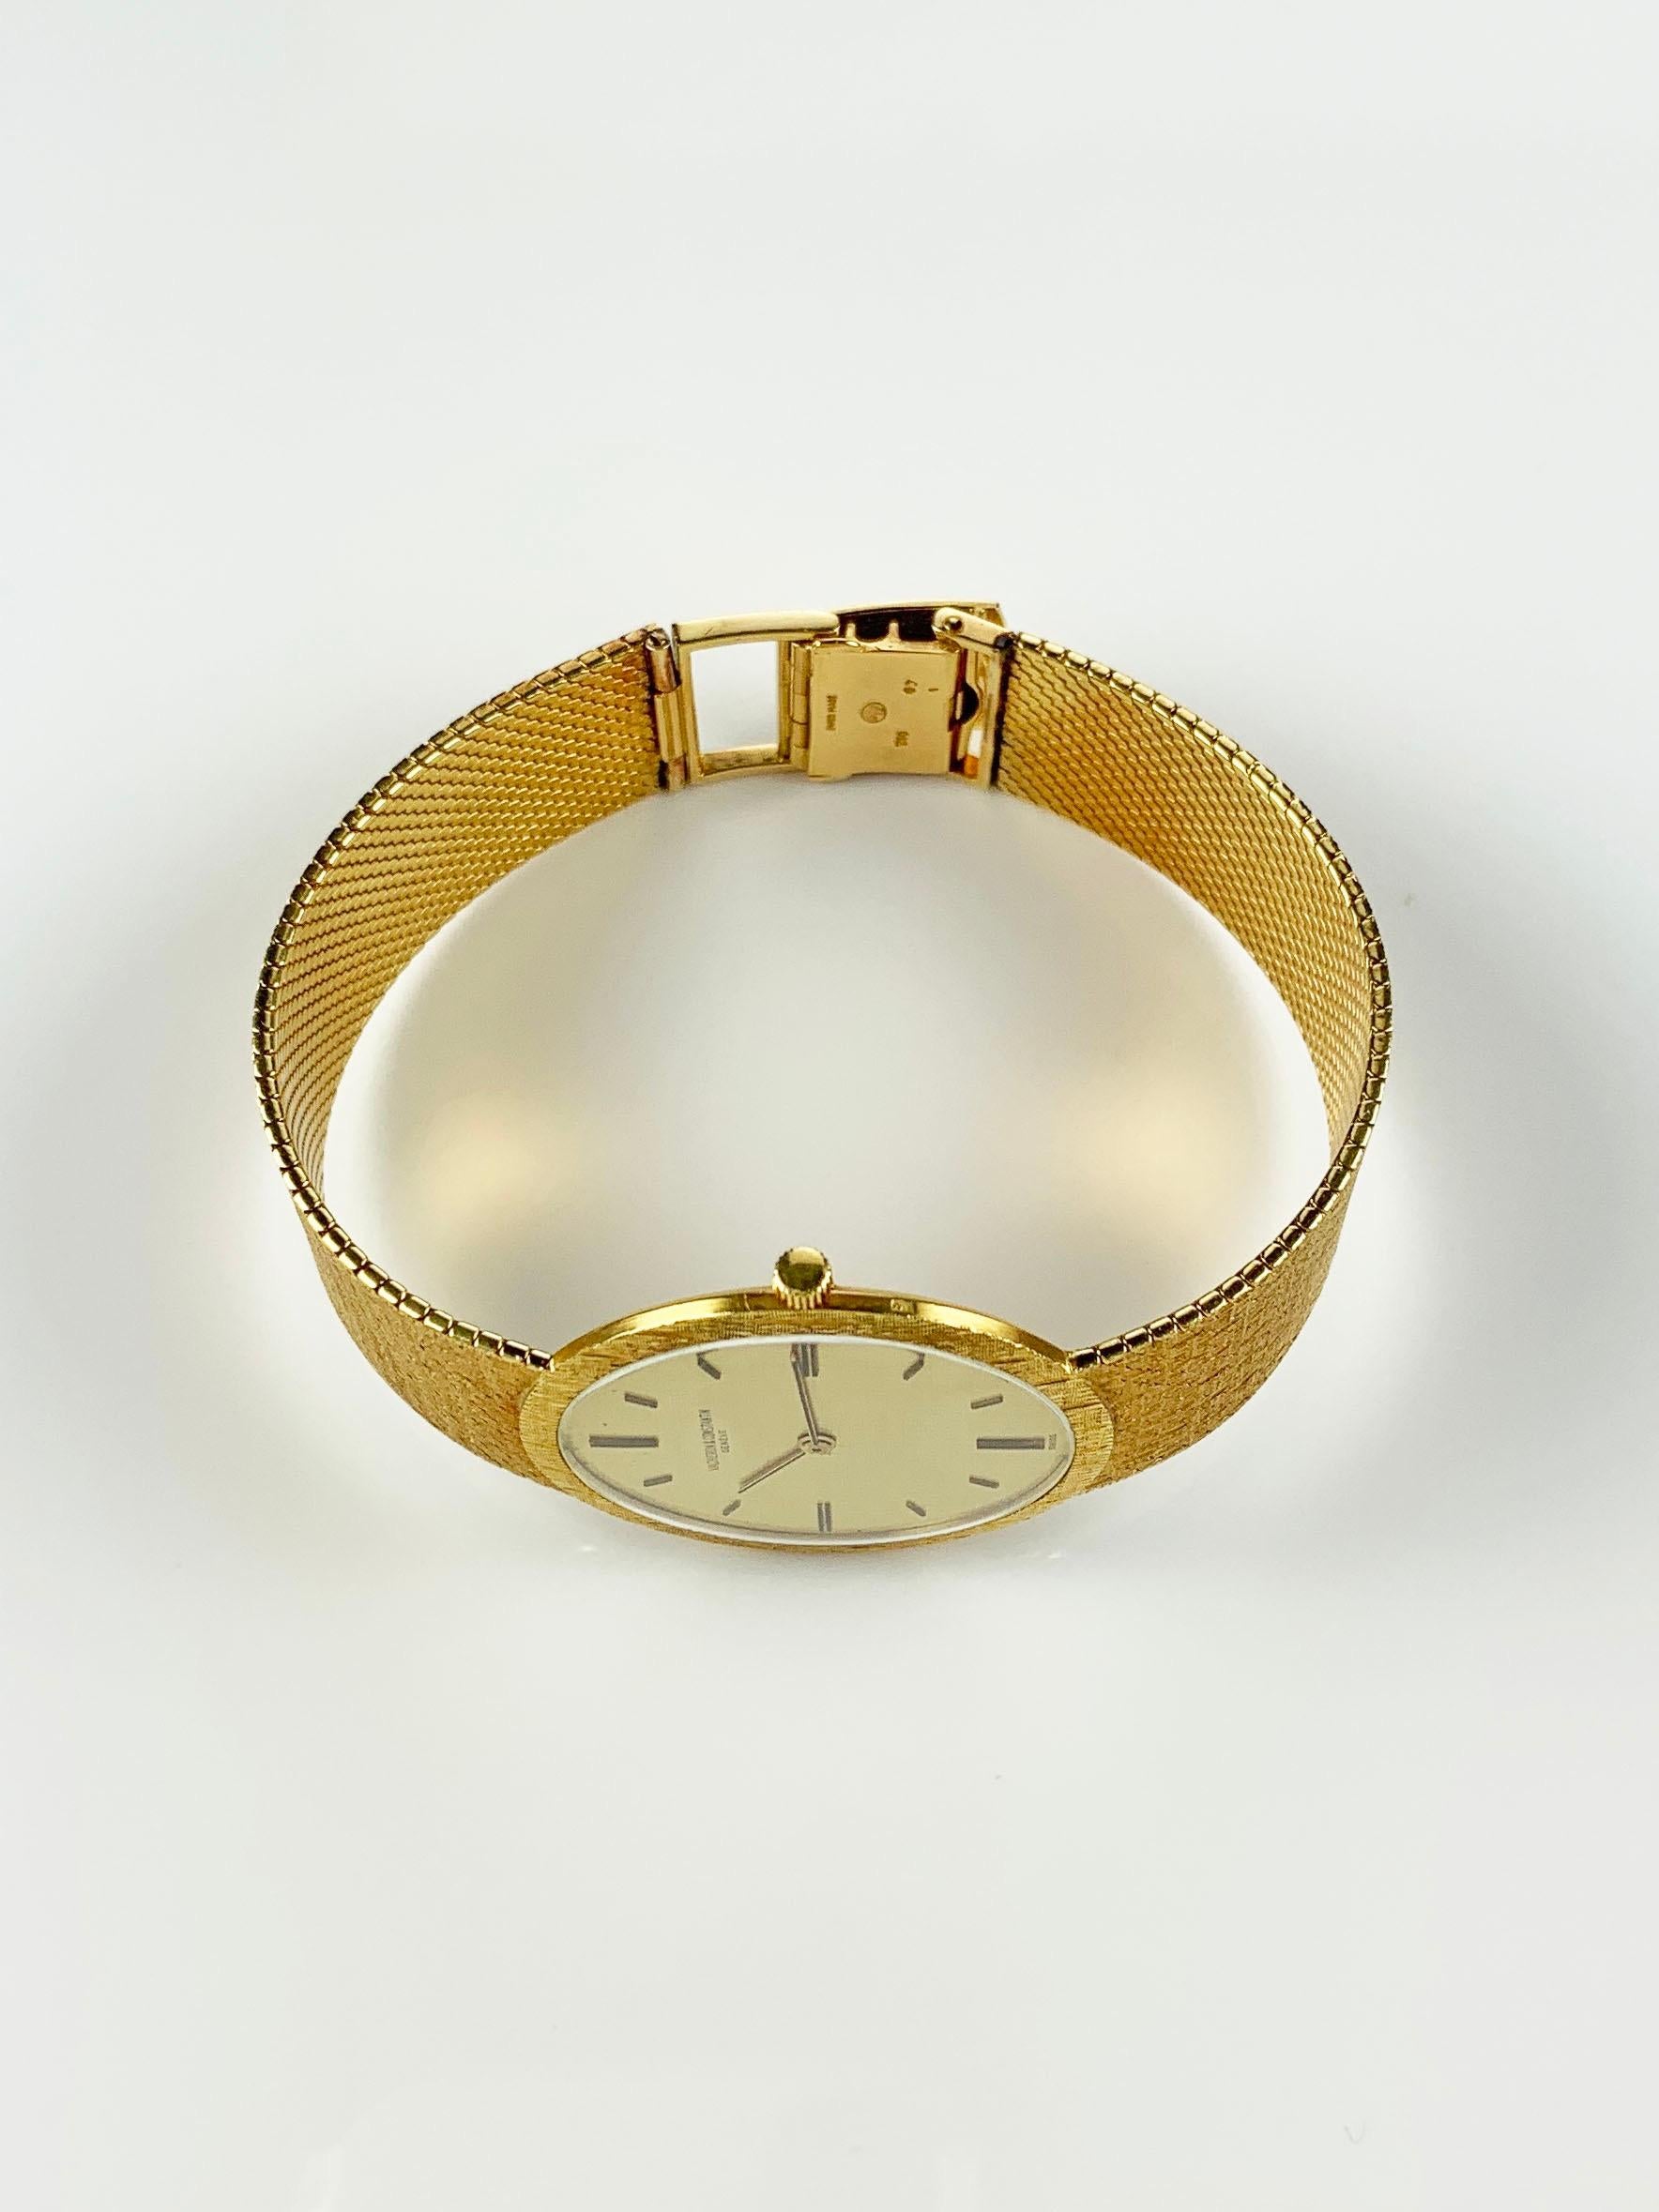 Vacheron Constantin 18 Karat Yellow Gold Ultra Thin Manual Wind Watch, 1960s For Sale 3